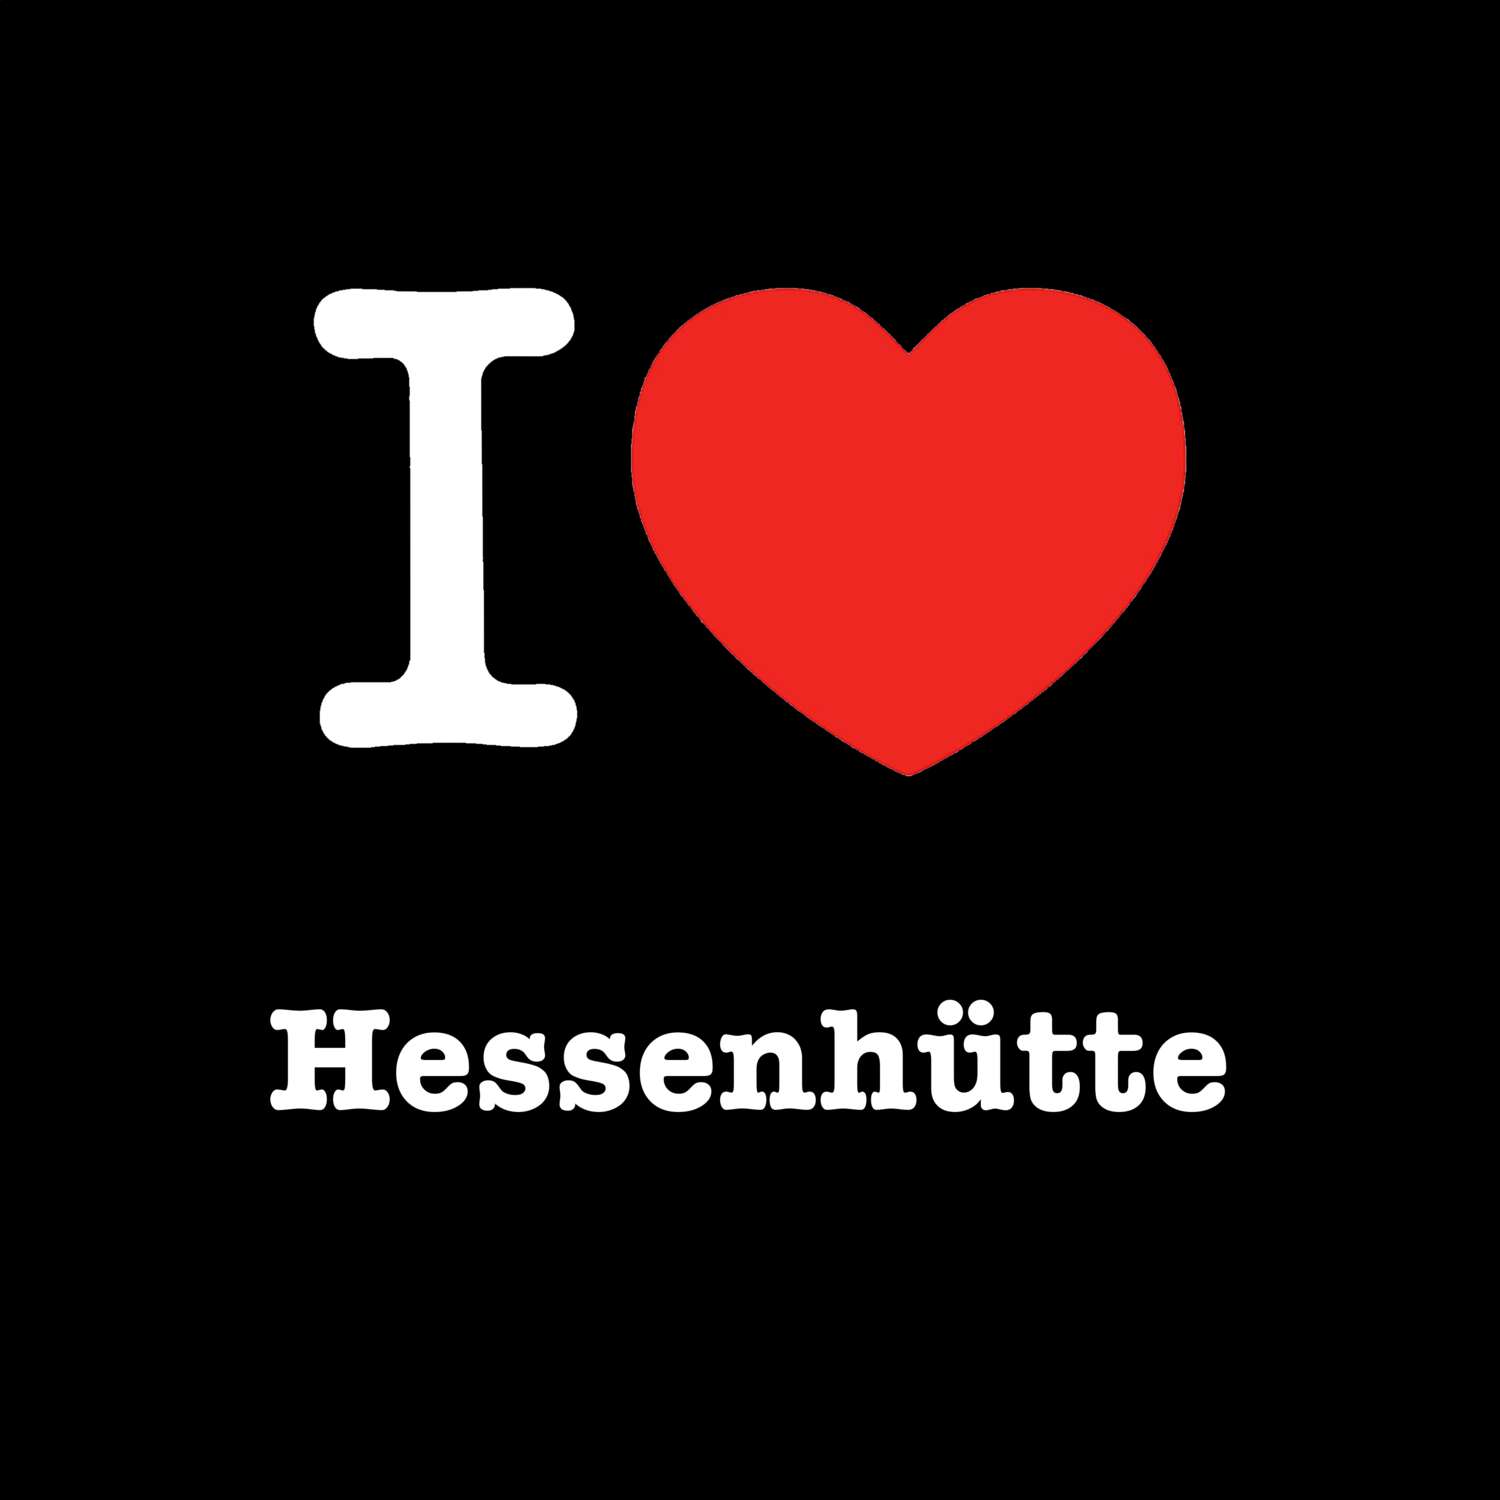 Hessenhütte T-Shirt »I love«